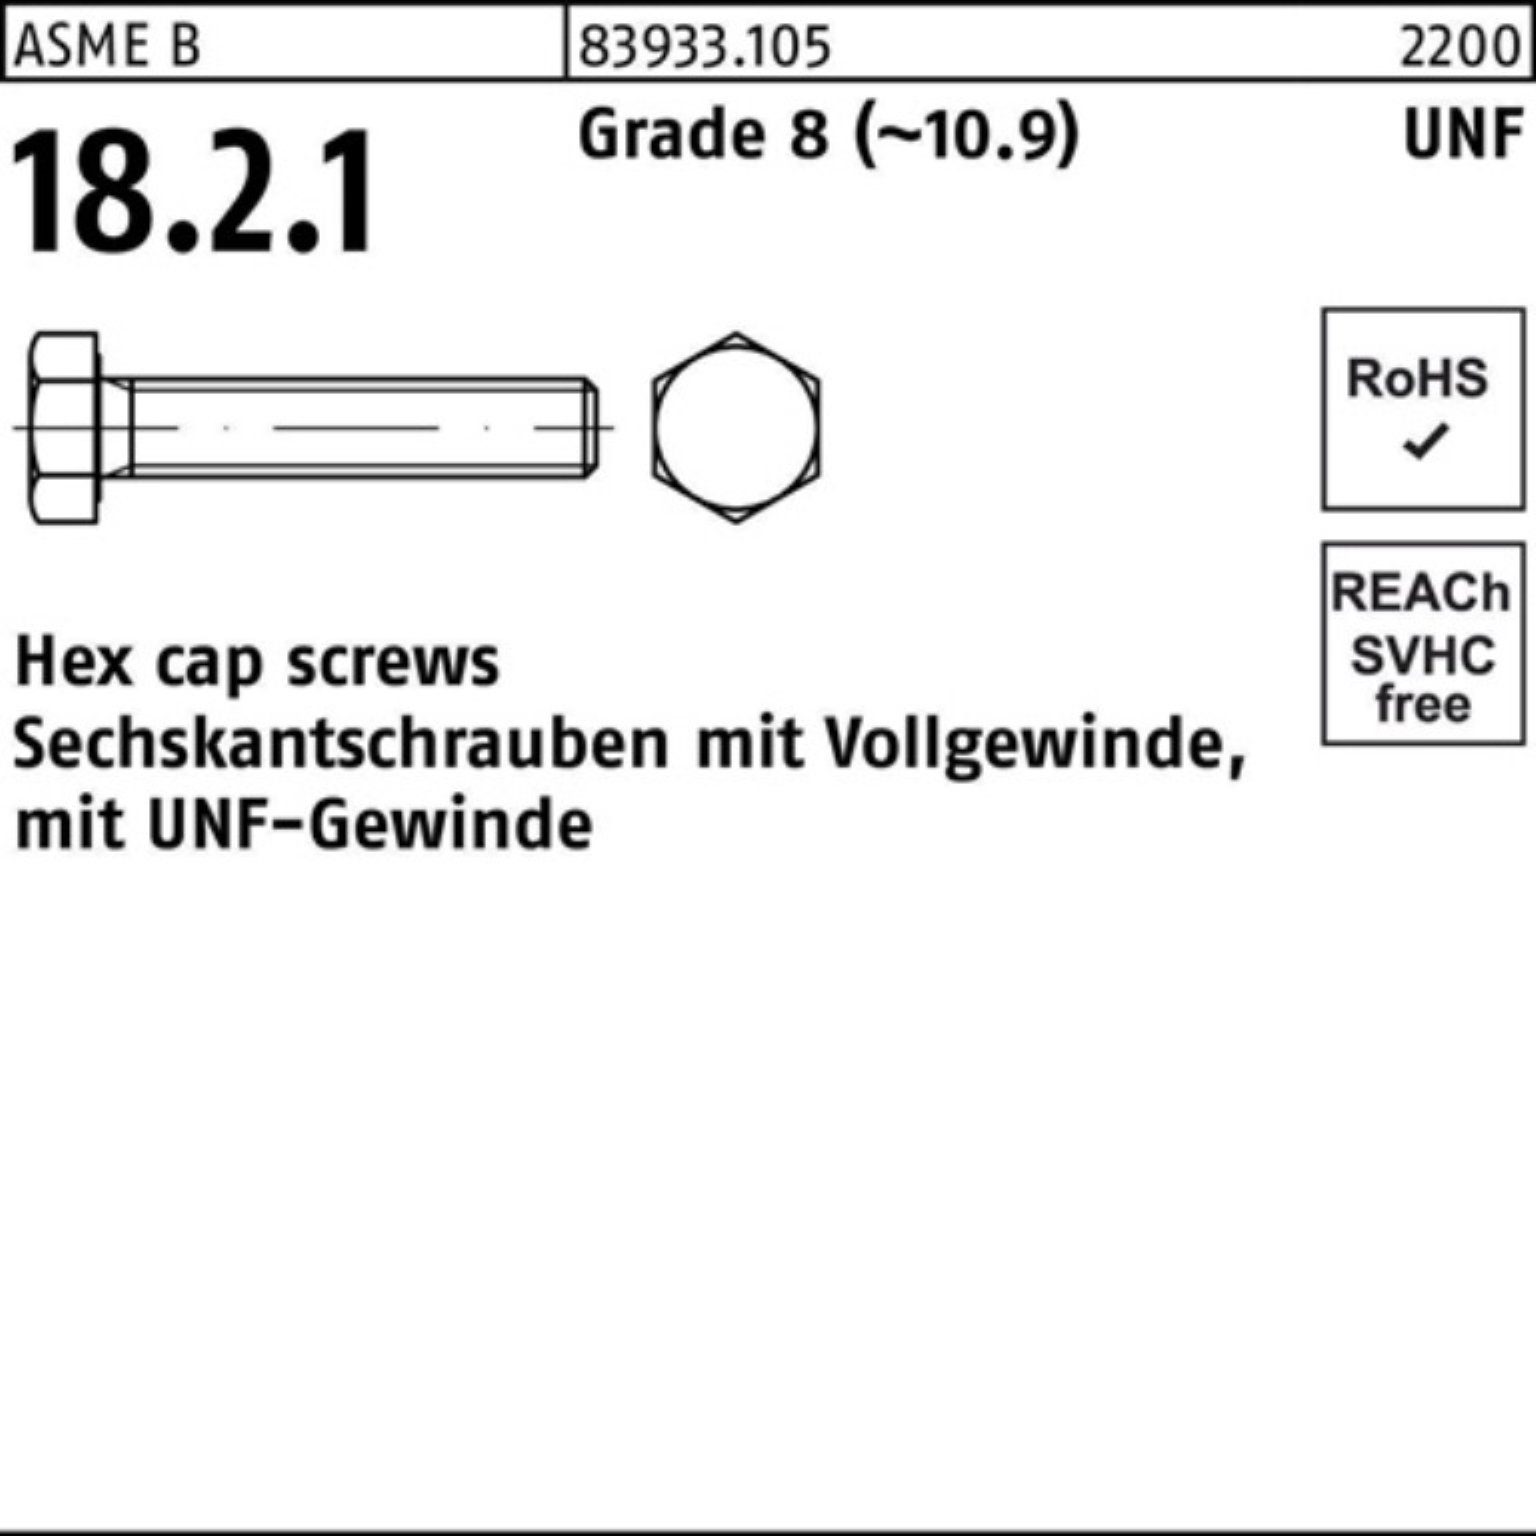 Reyher Sechskantschraube 100er Pack Sechskantschraube R 83933 UNF-Gewinde VG 3/4x 2 Grade 8 (1